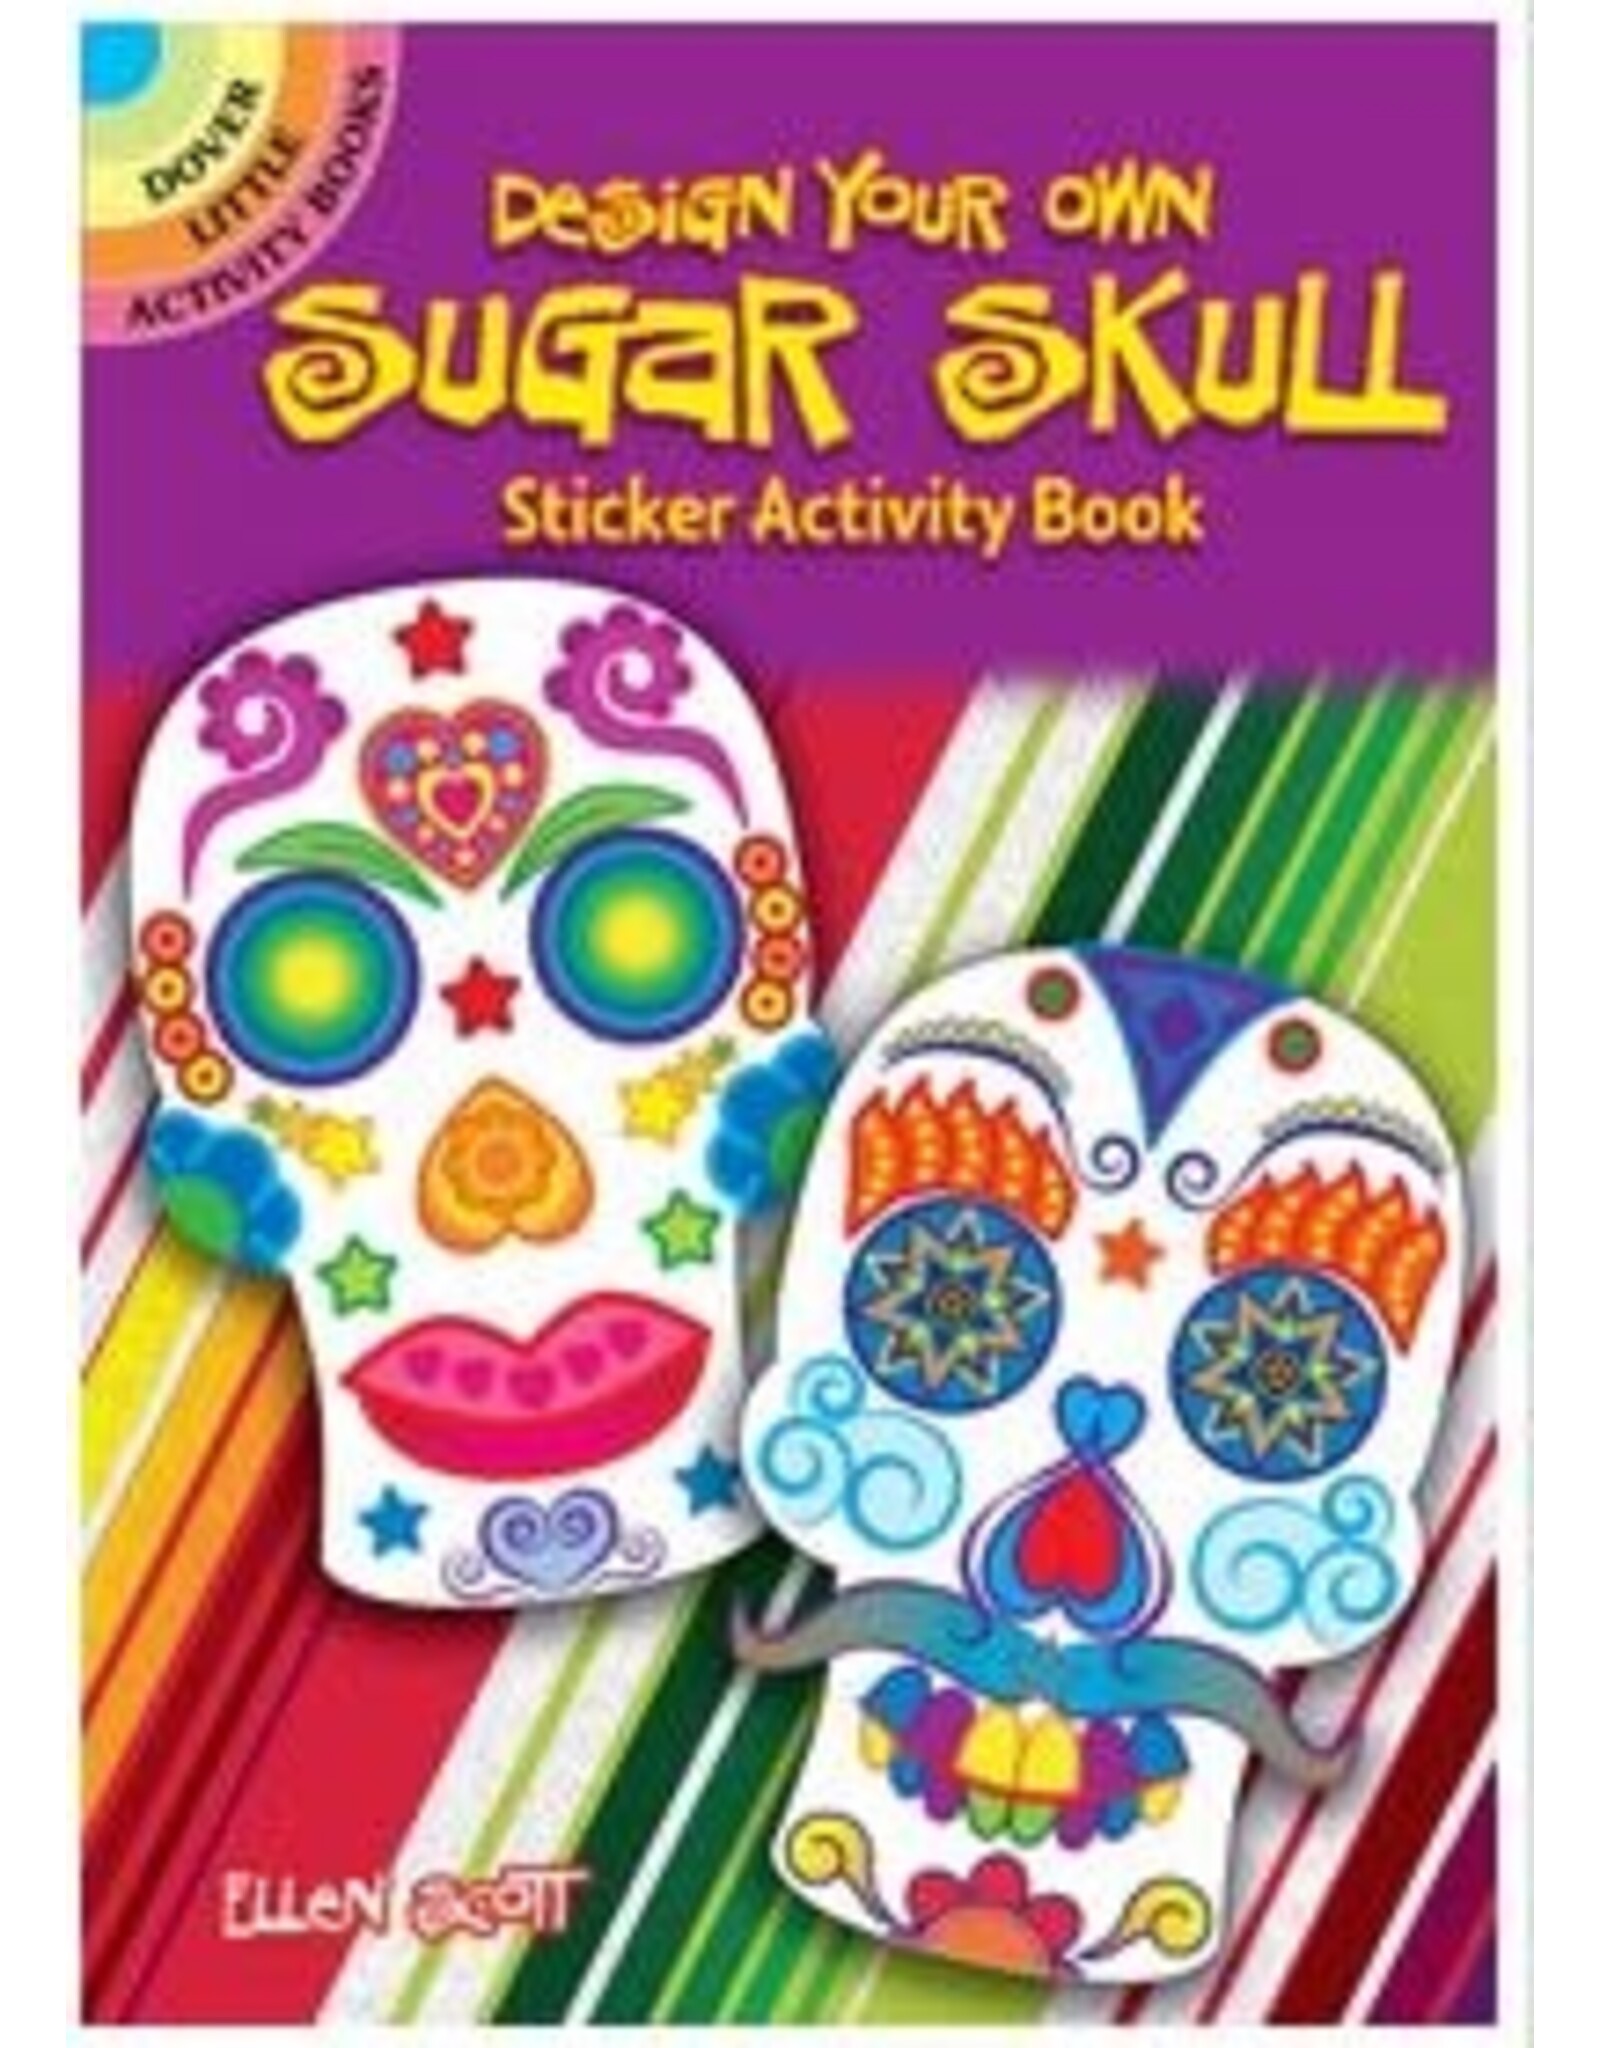 Dover Publications Design Your Own Sugar Skull Sticker Activity Book by Ellen Scott